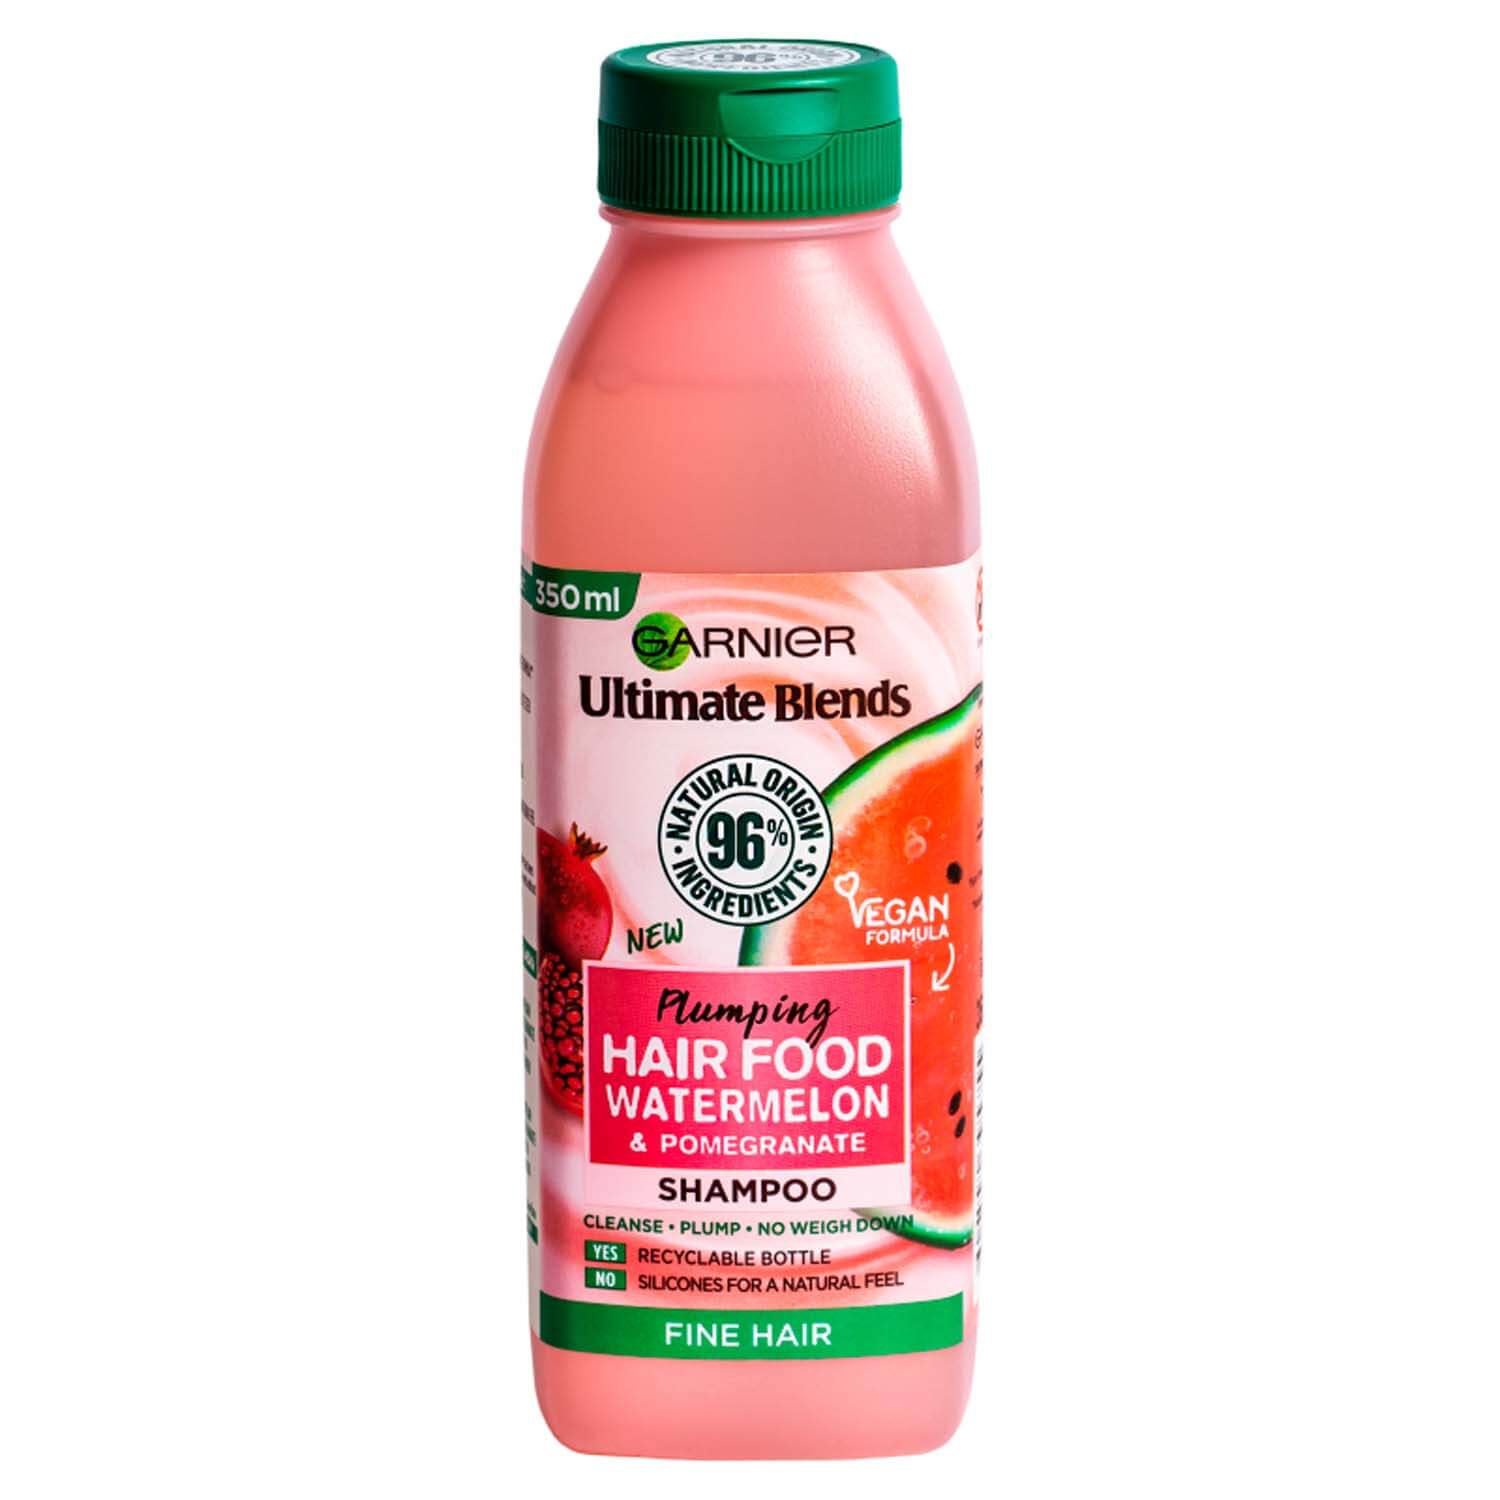 Garnier Ultimate Blends Plumping Hair Food Watermelon Shampoo - 350ml 1 Shaws Department Stores